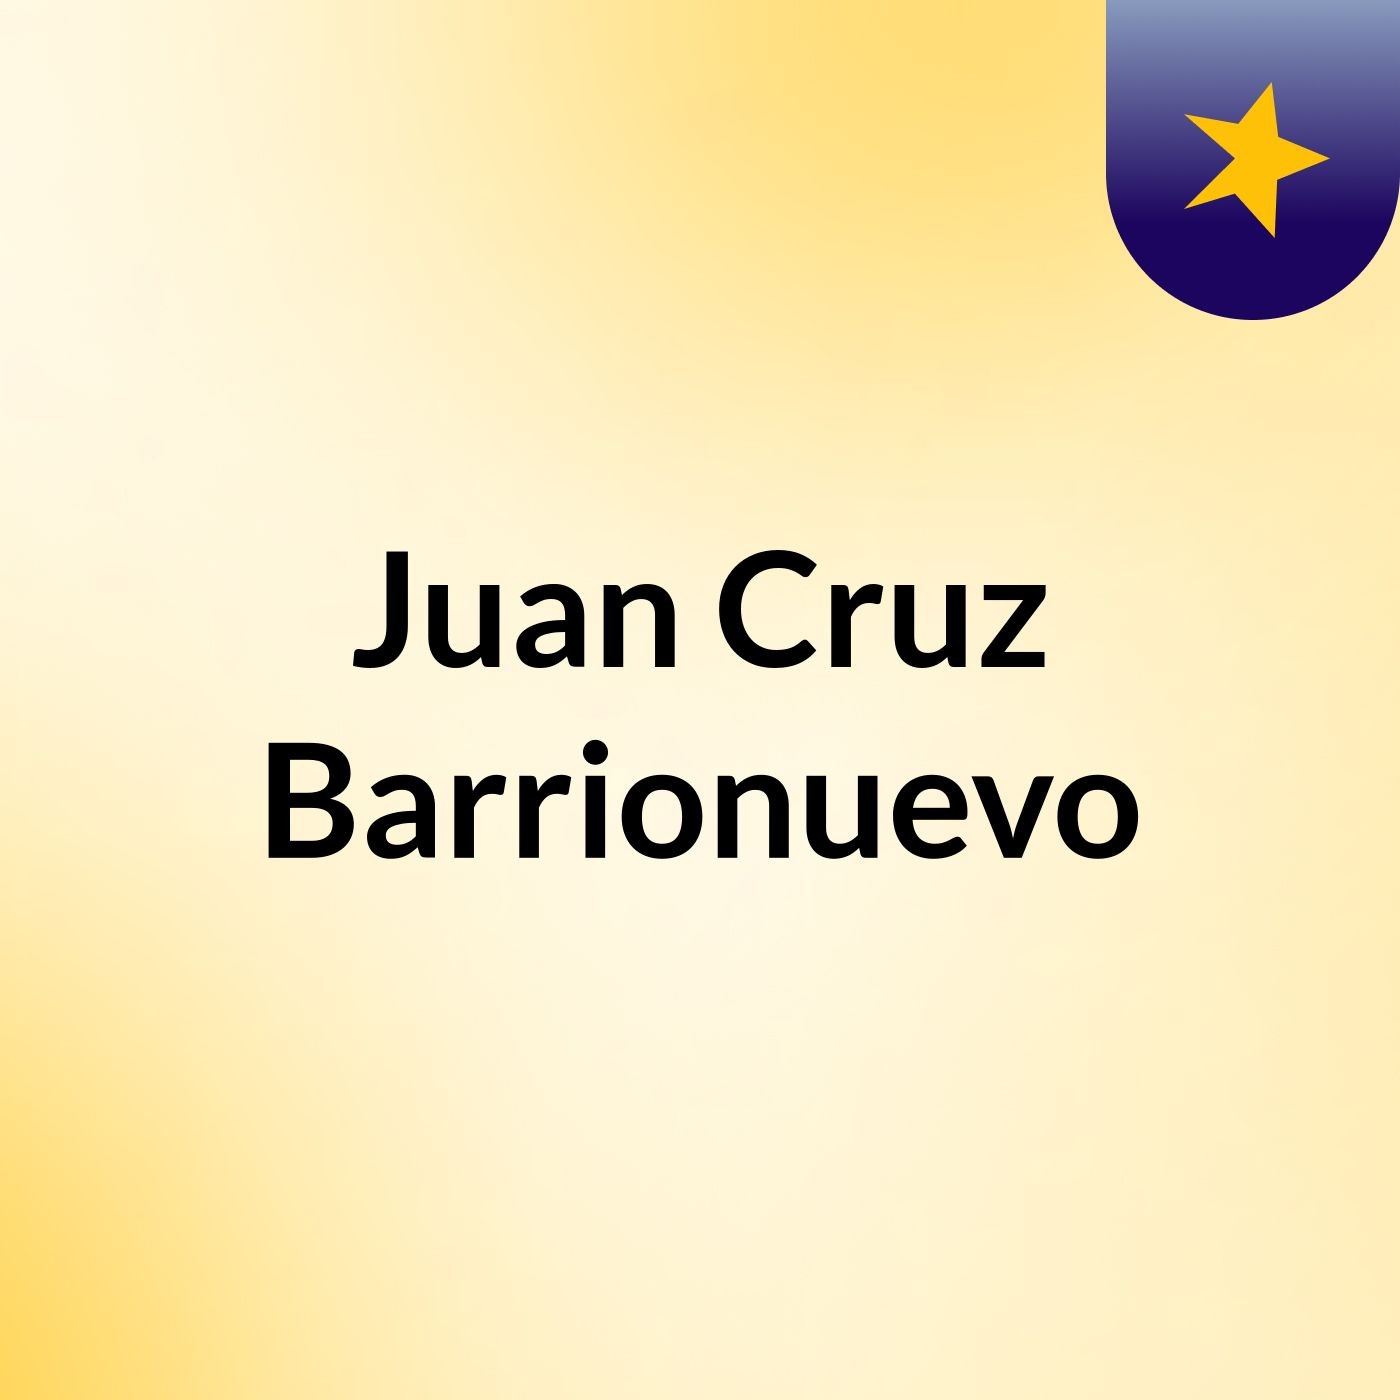 Juan Cruz Barrionuevo